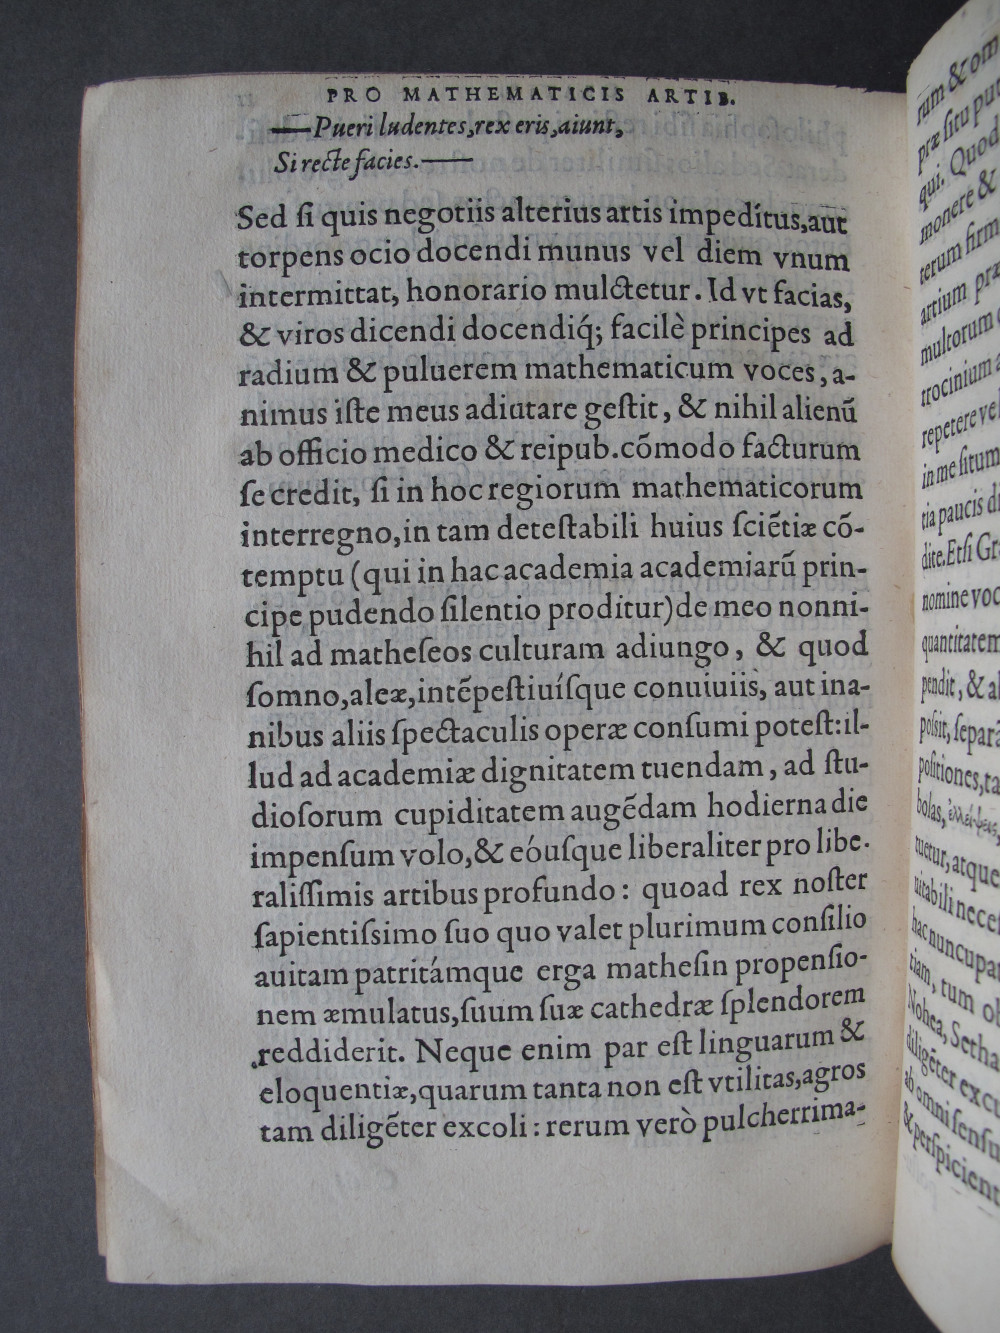 Folio 11 verso